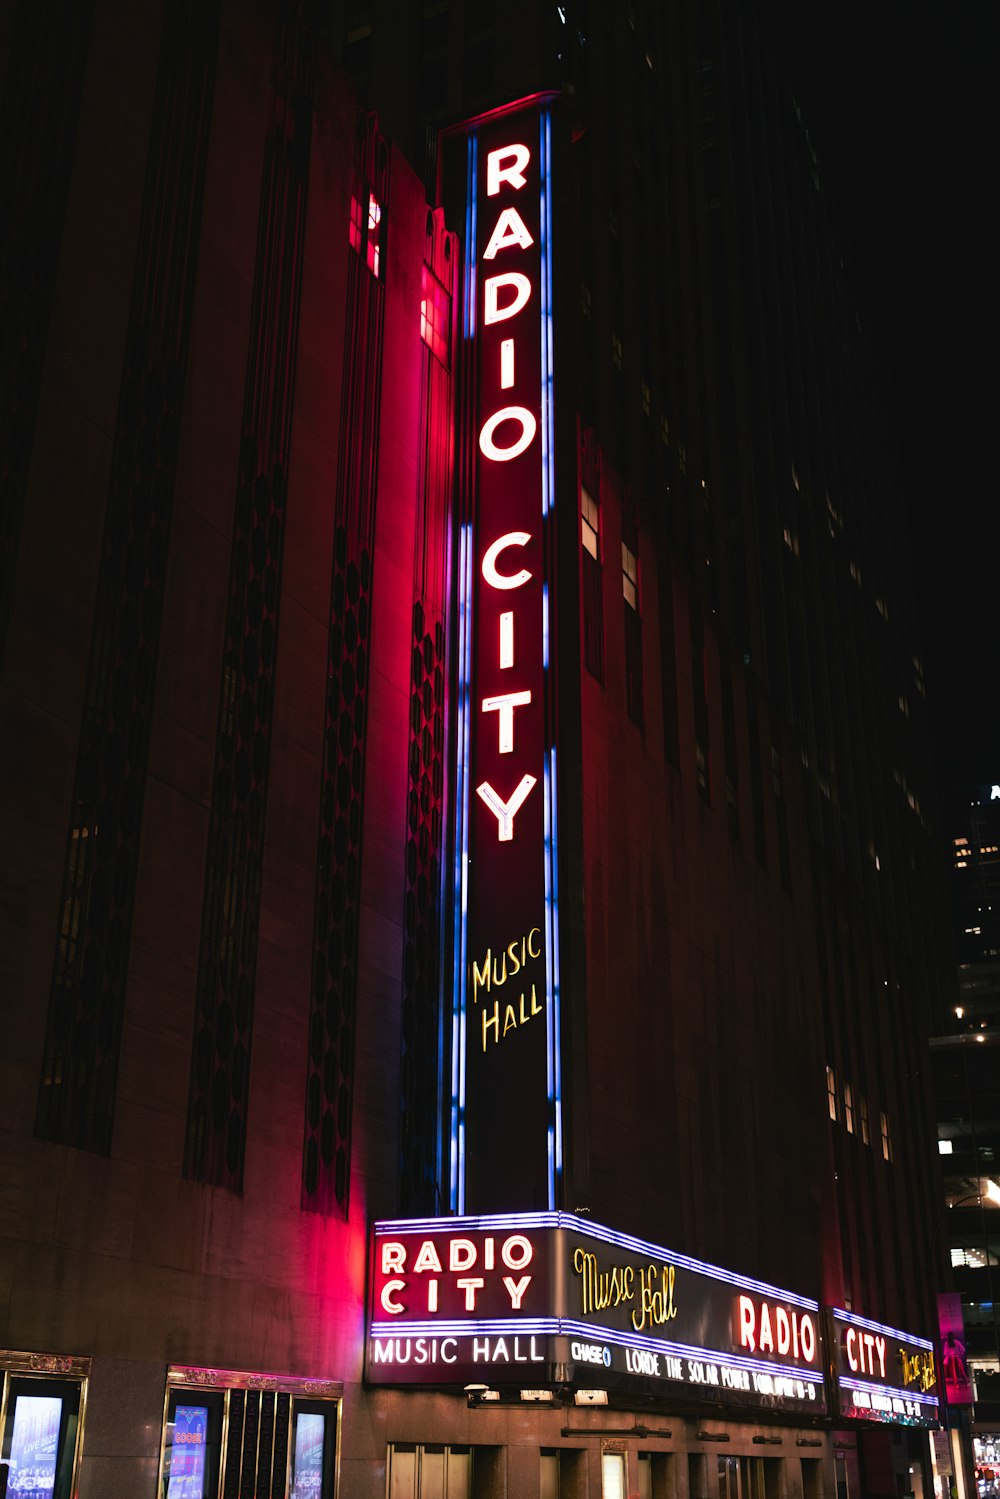 the radio city music hall is lit up at night